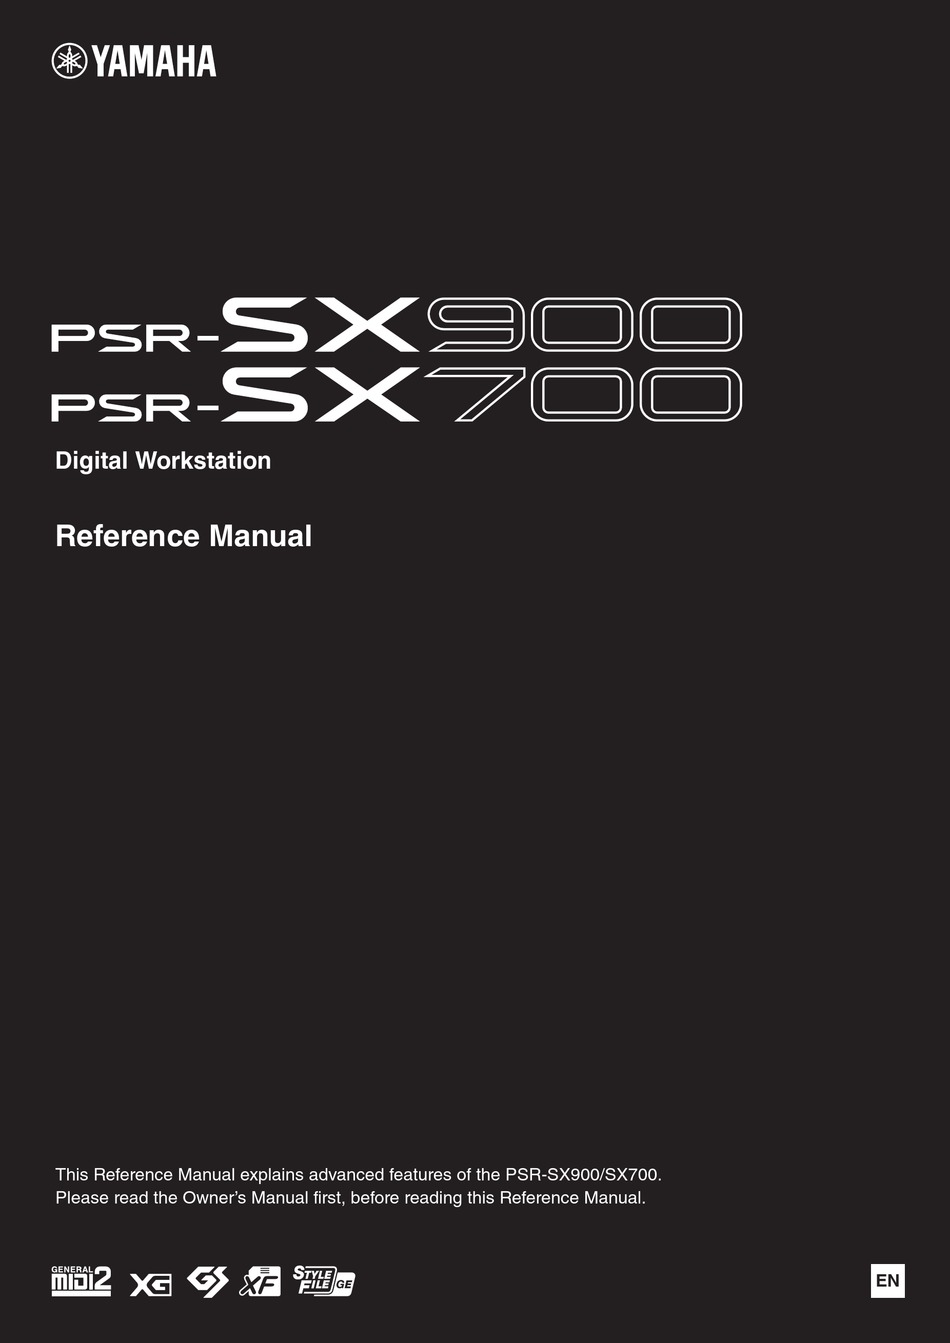 YAMAHA PSR-SX900 REFERENCE MANUAL Pdf Download | ManualsLib